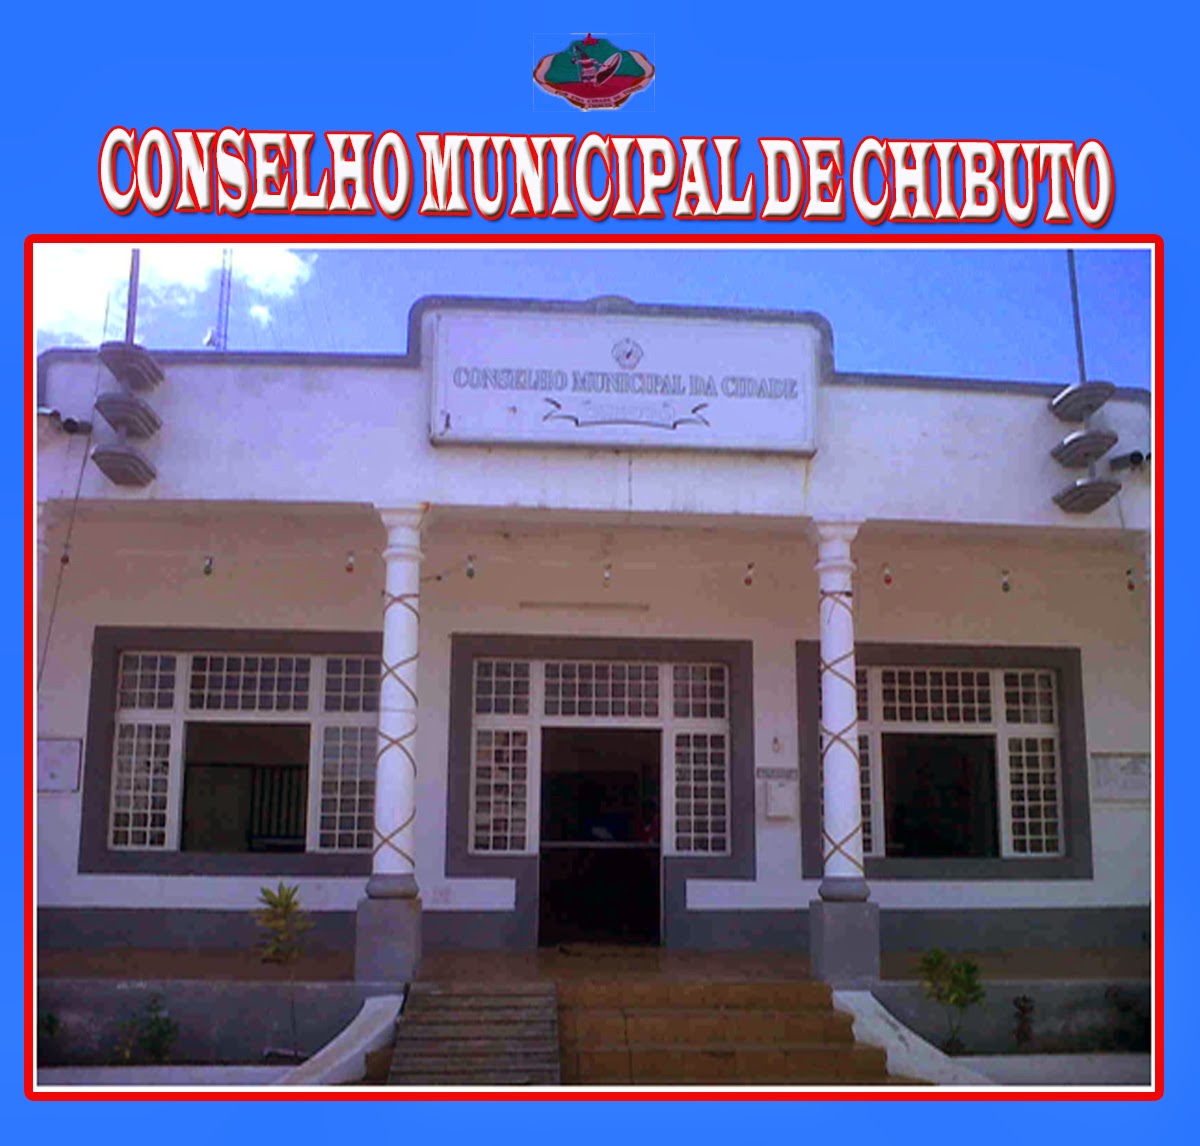 CONSELHO MUNICIPAL DE CHIBUTO